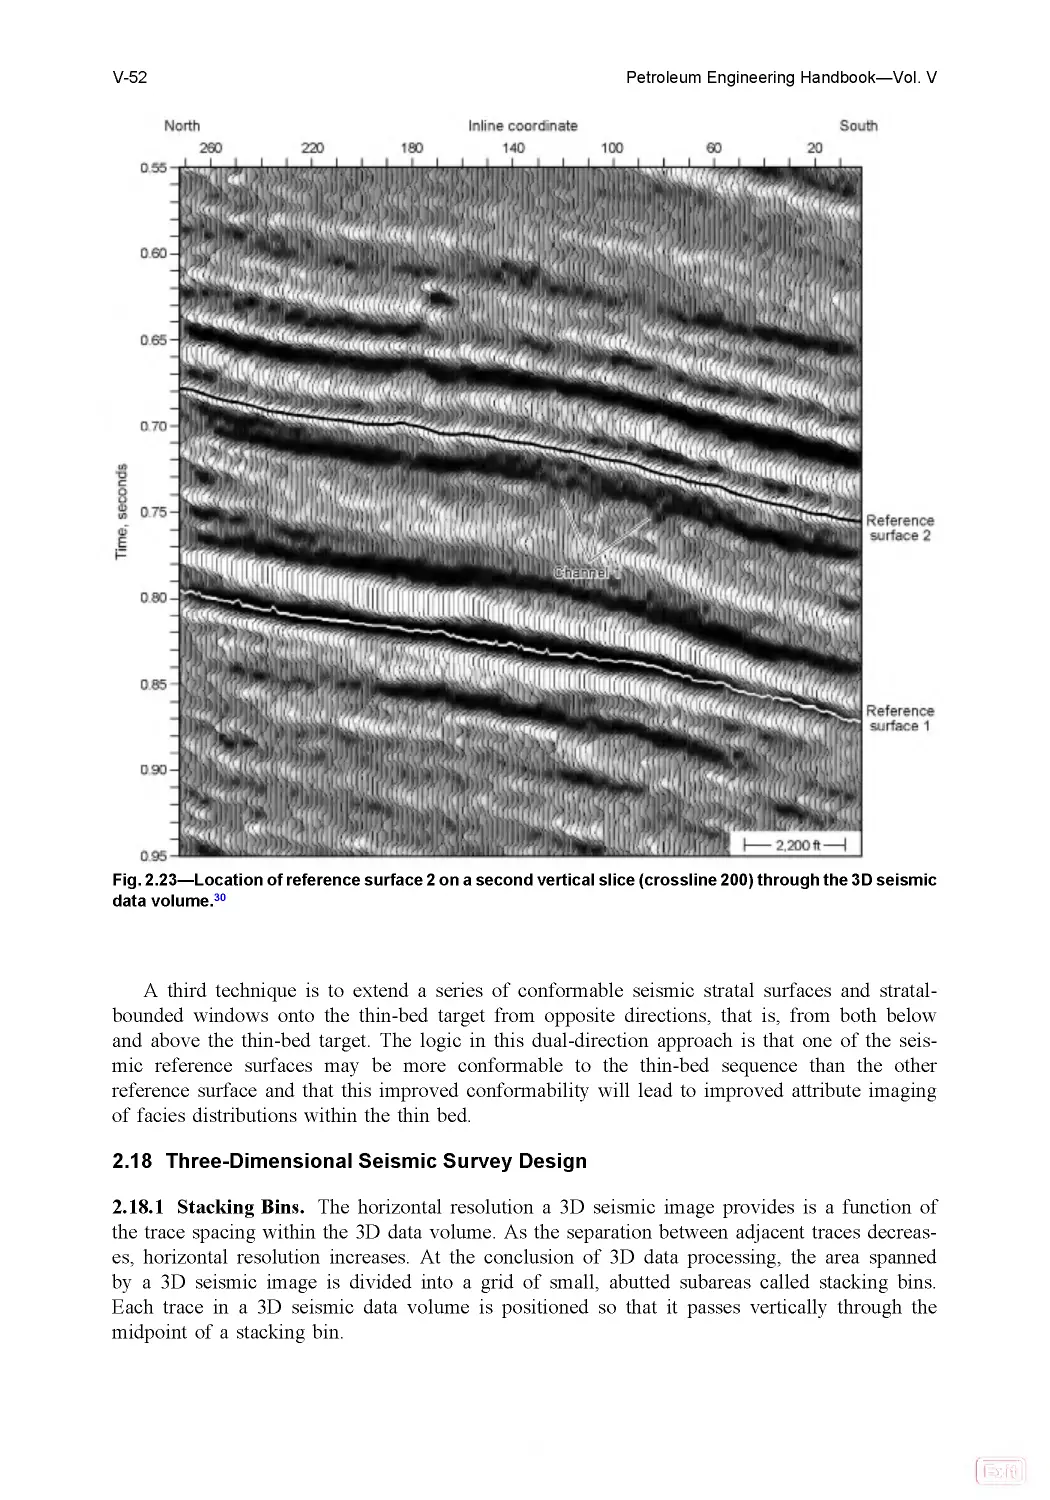 2.18 Three-Dimensional Seismic Survey Design